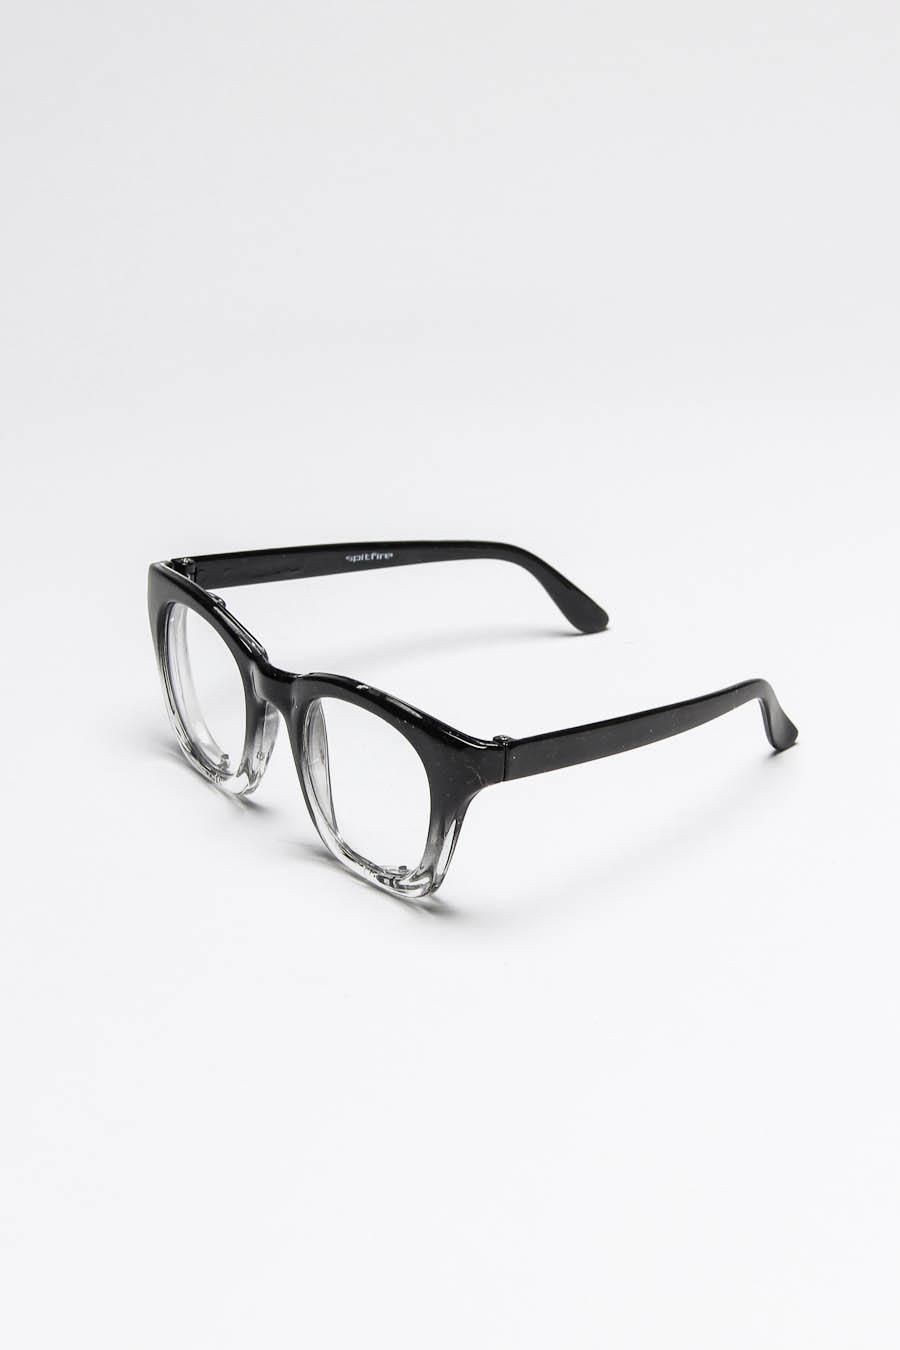 Gafas con montura negra y transparente: Gafas nerd,  warby parker  